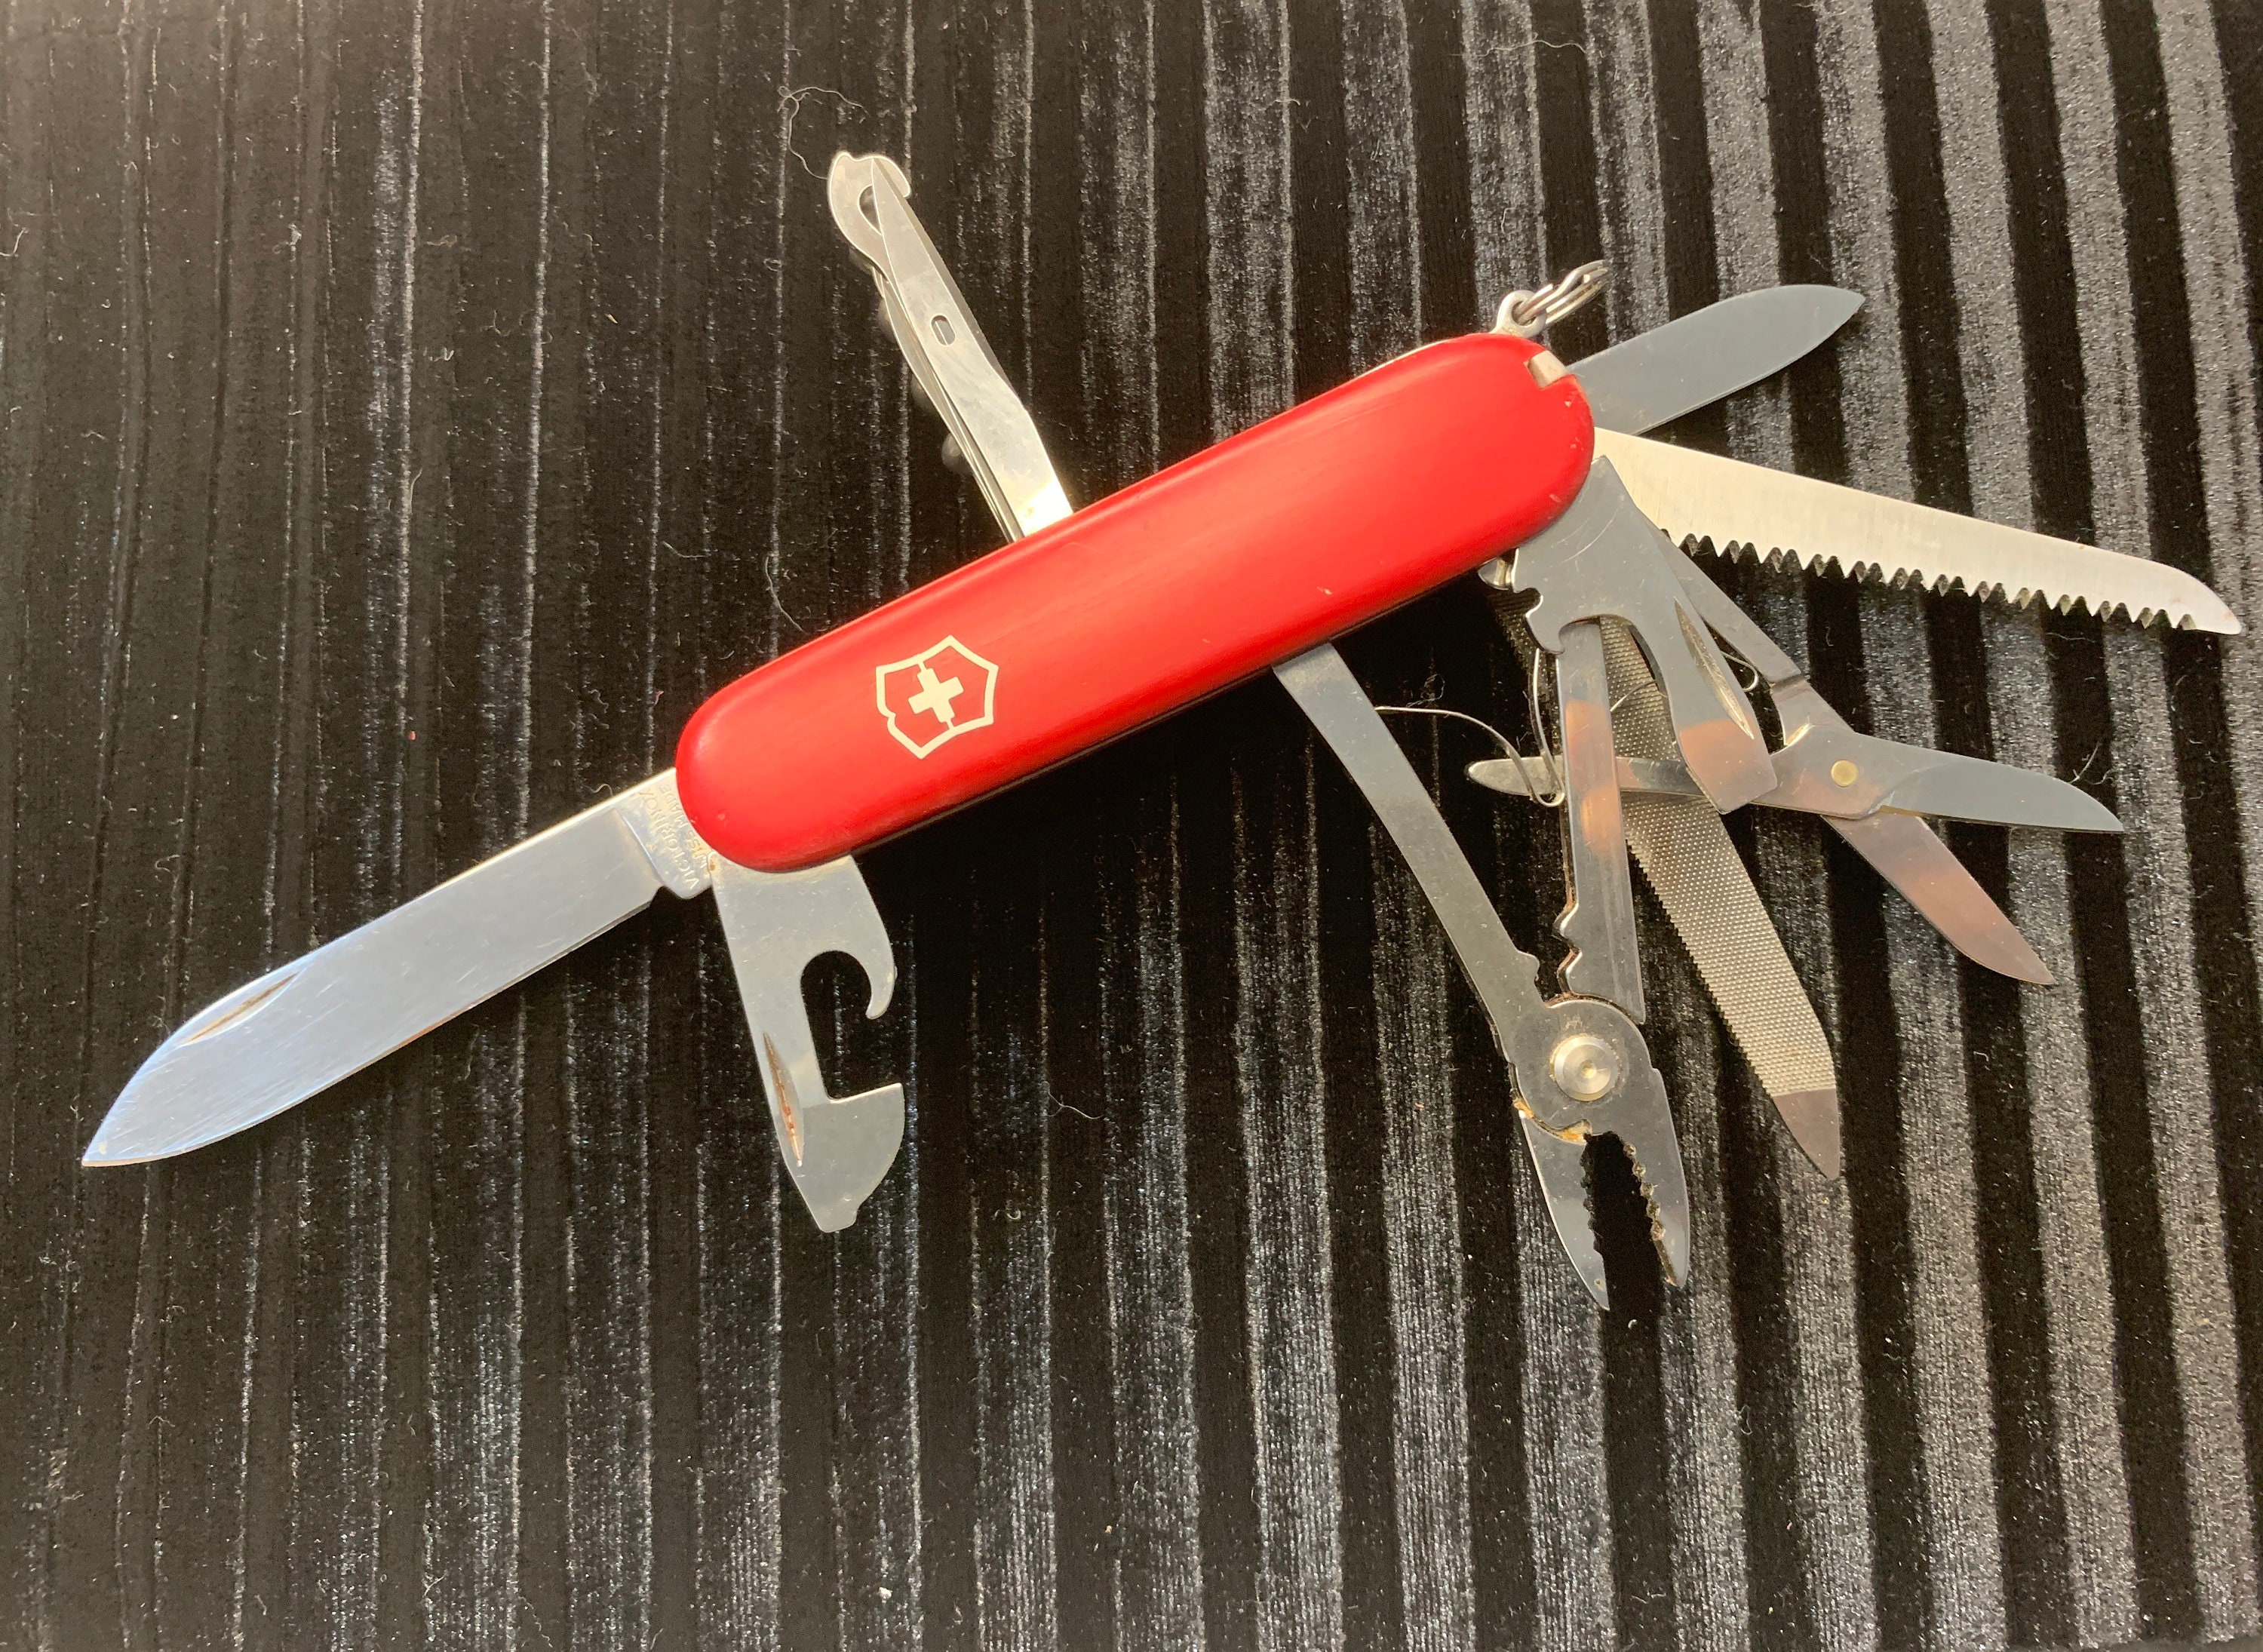 Victorinox RangerGrip 68, Swiss pocket knife  Advantageously shopping at